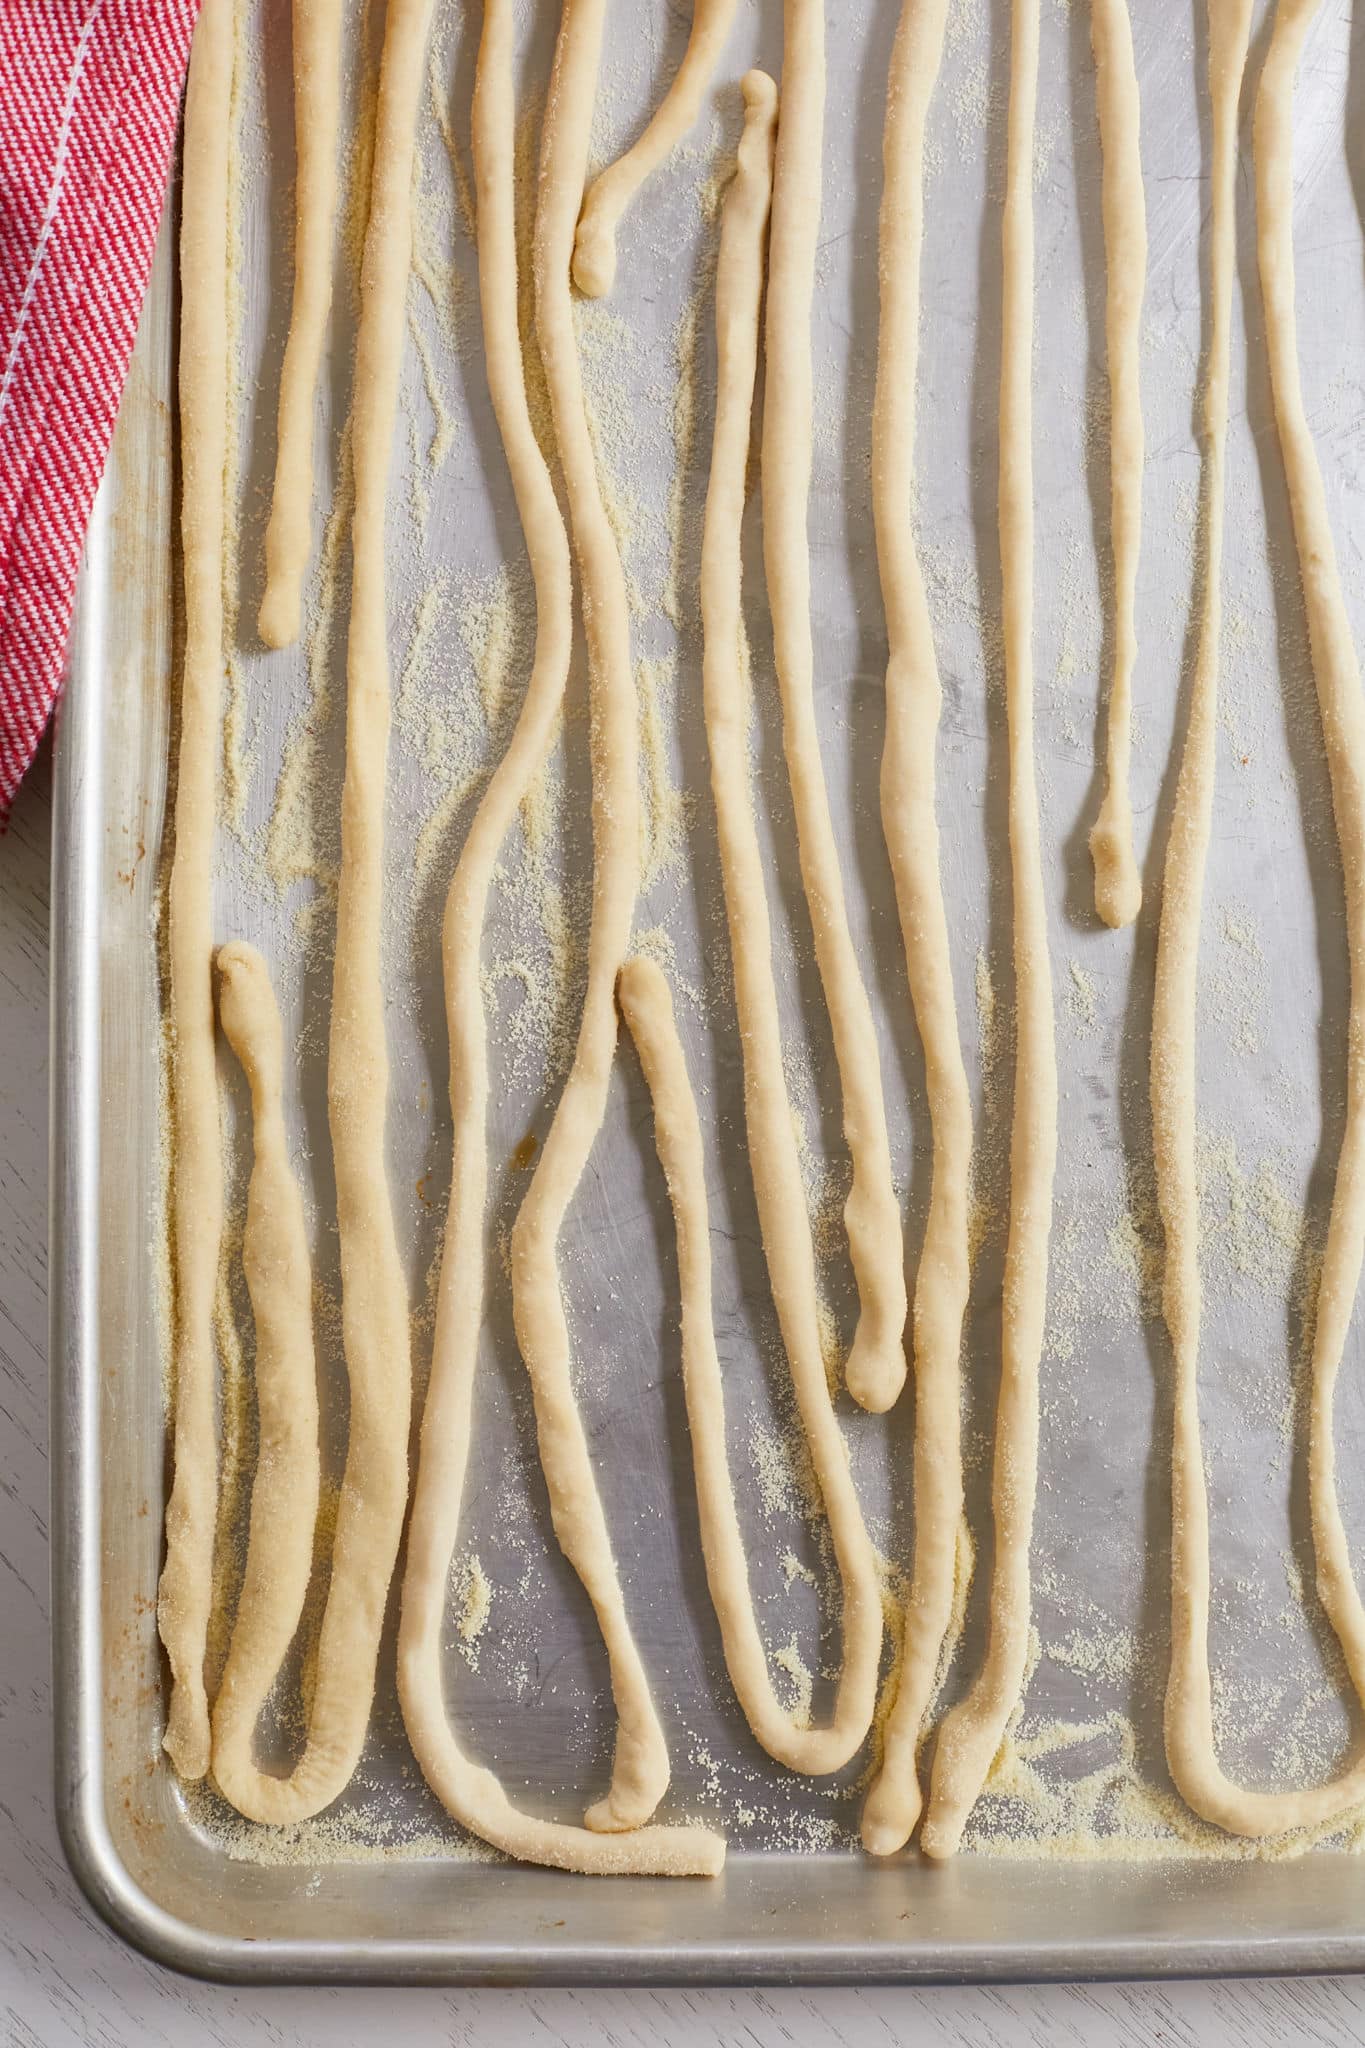 A baking sheet full of pici pasta strands.